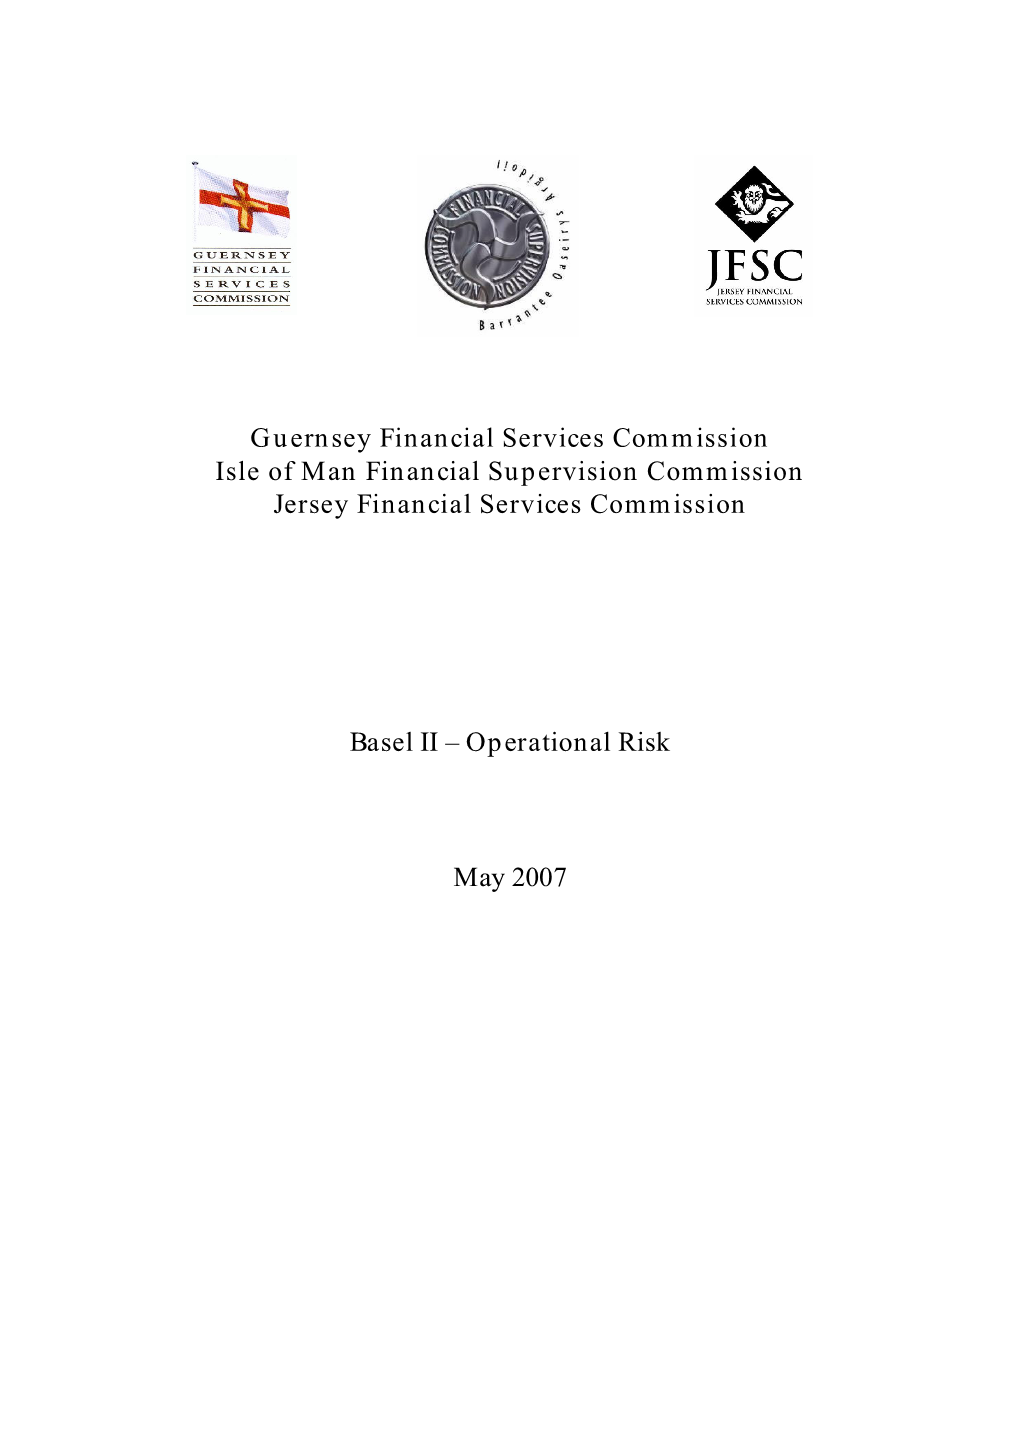 Basel II Operational Risk